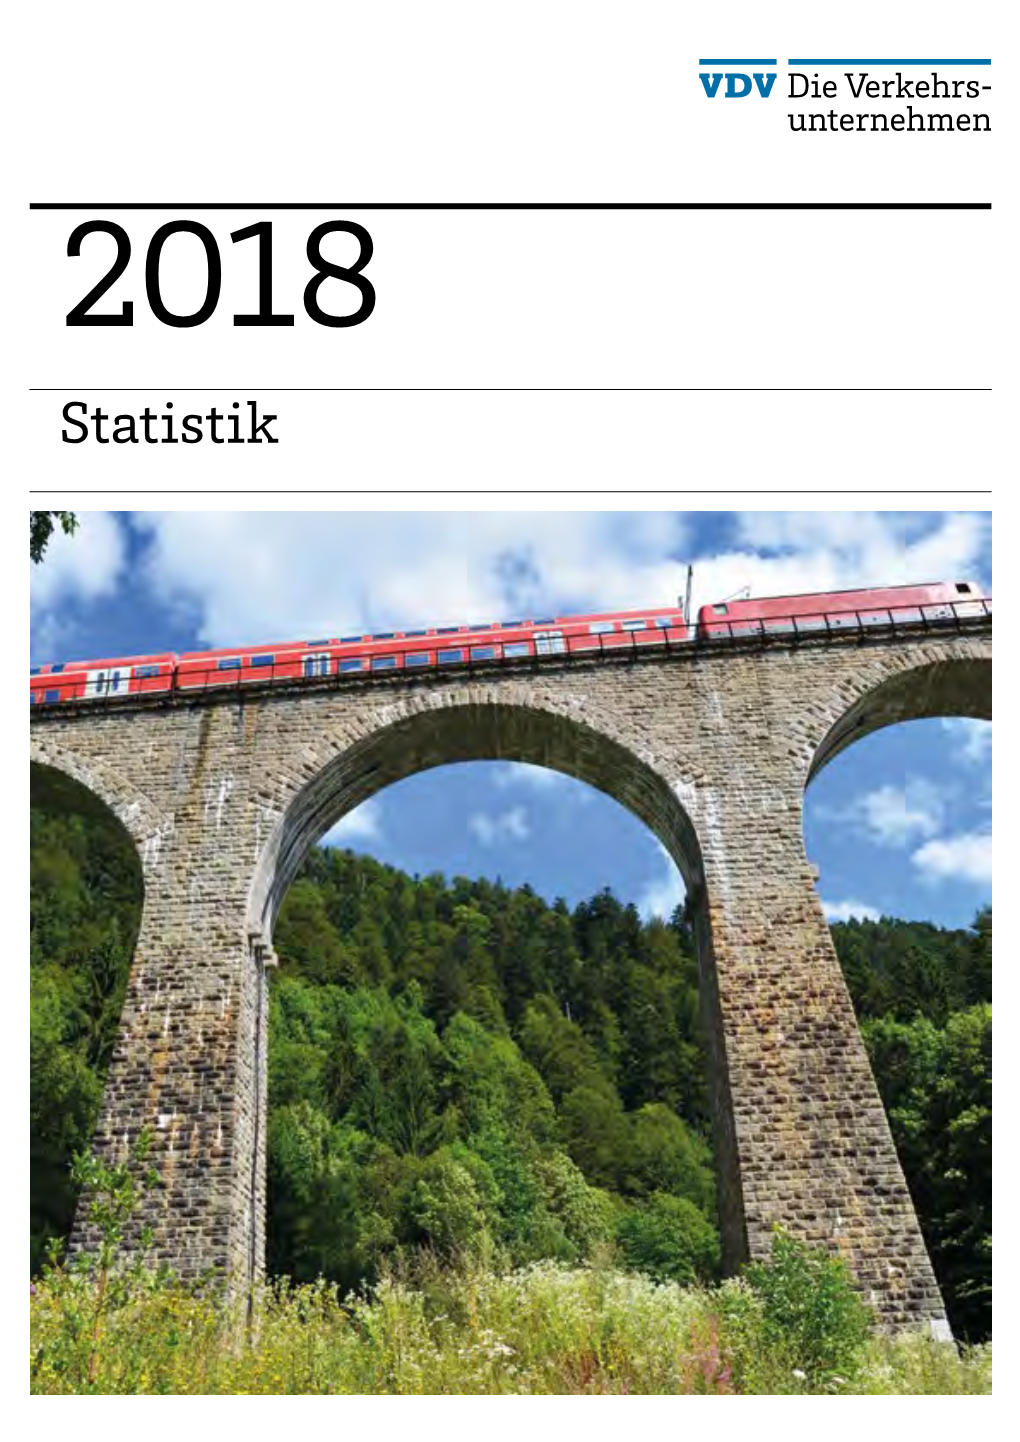 VDV-Statistik 2018 Güterverkehr